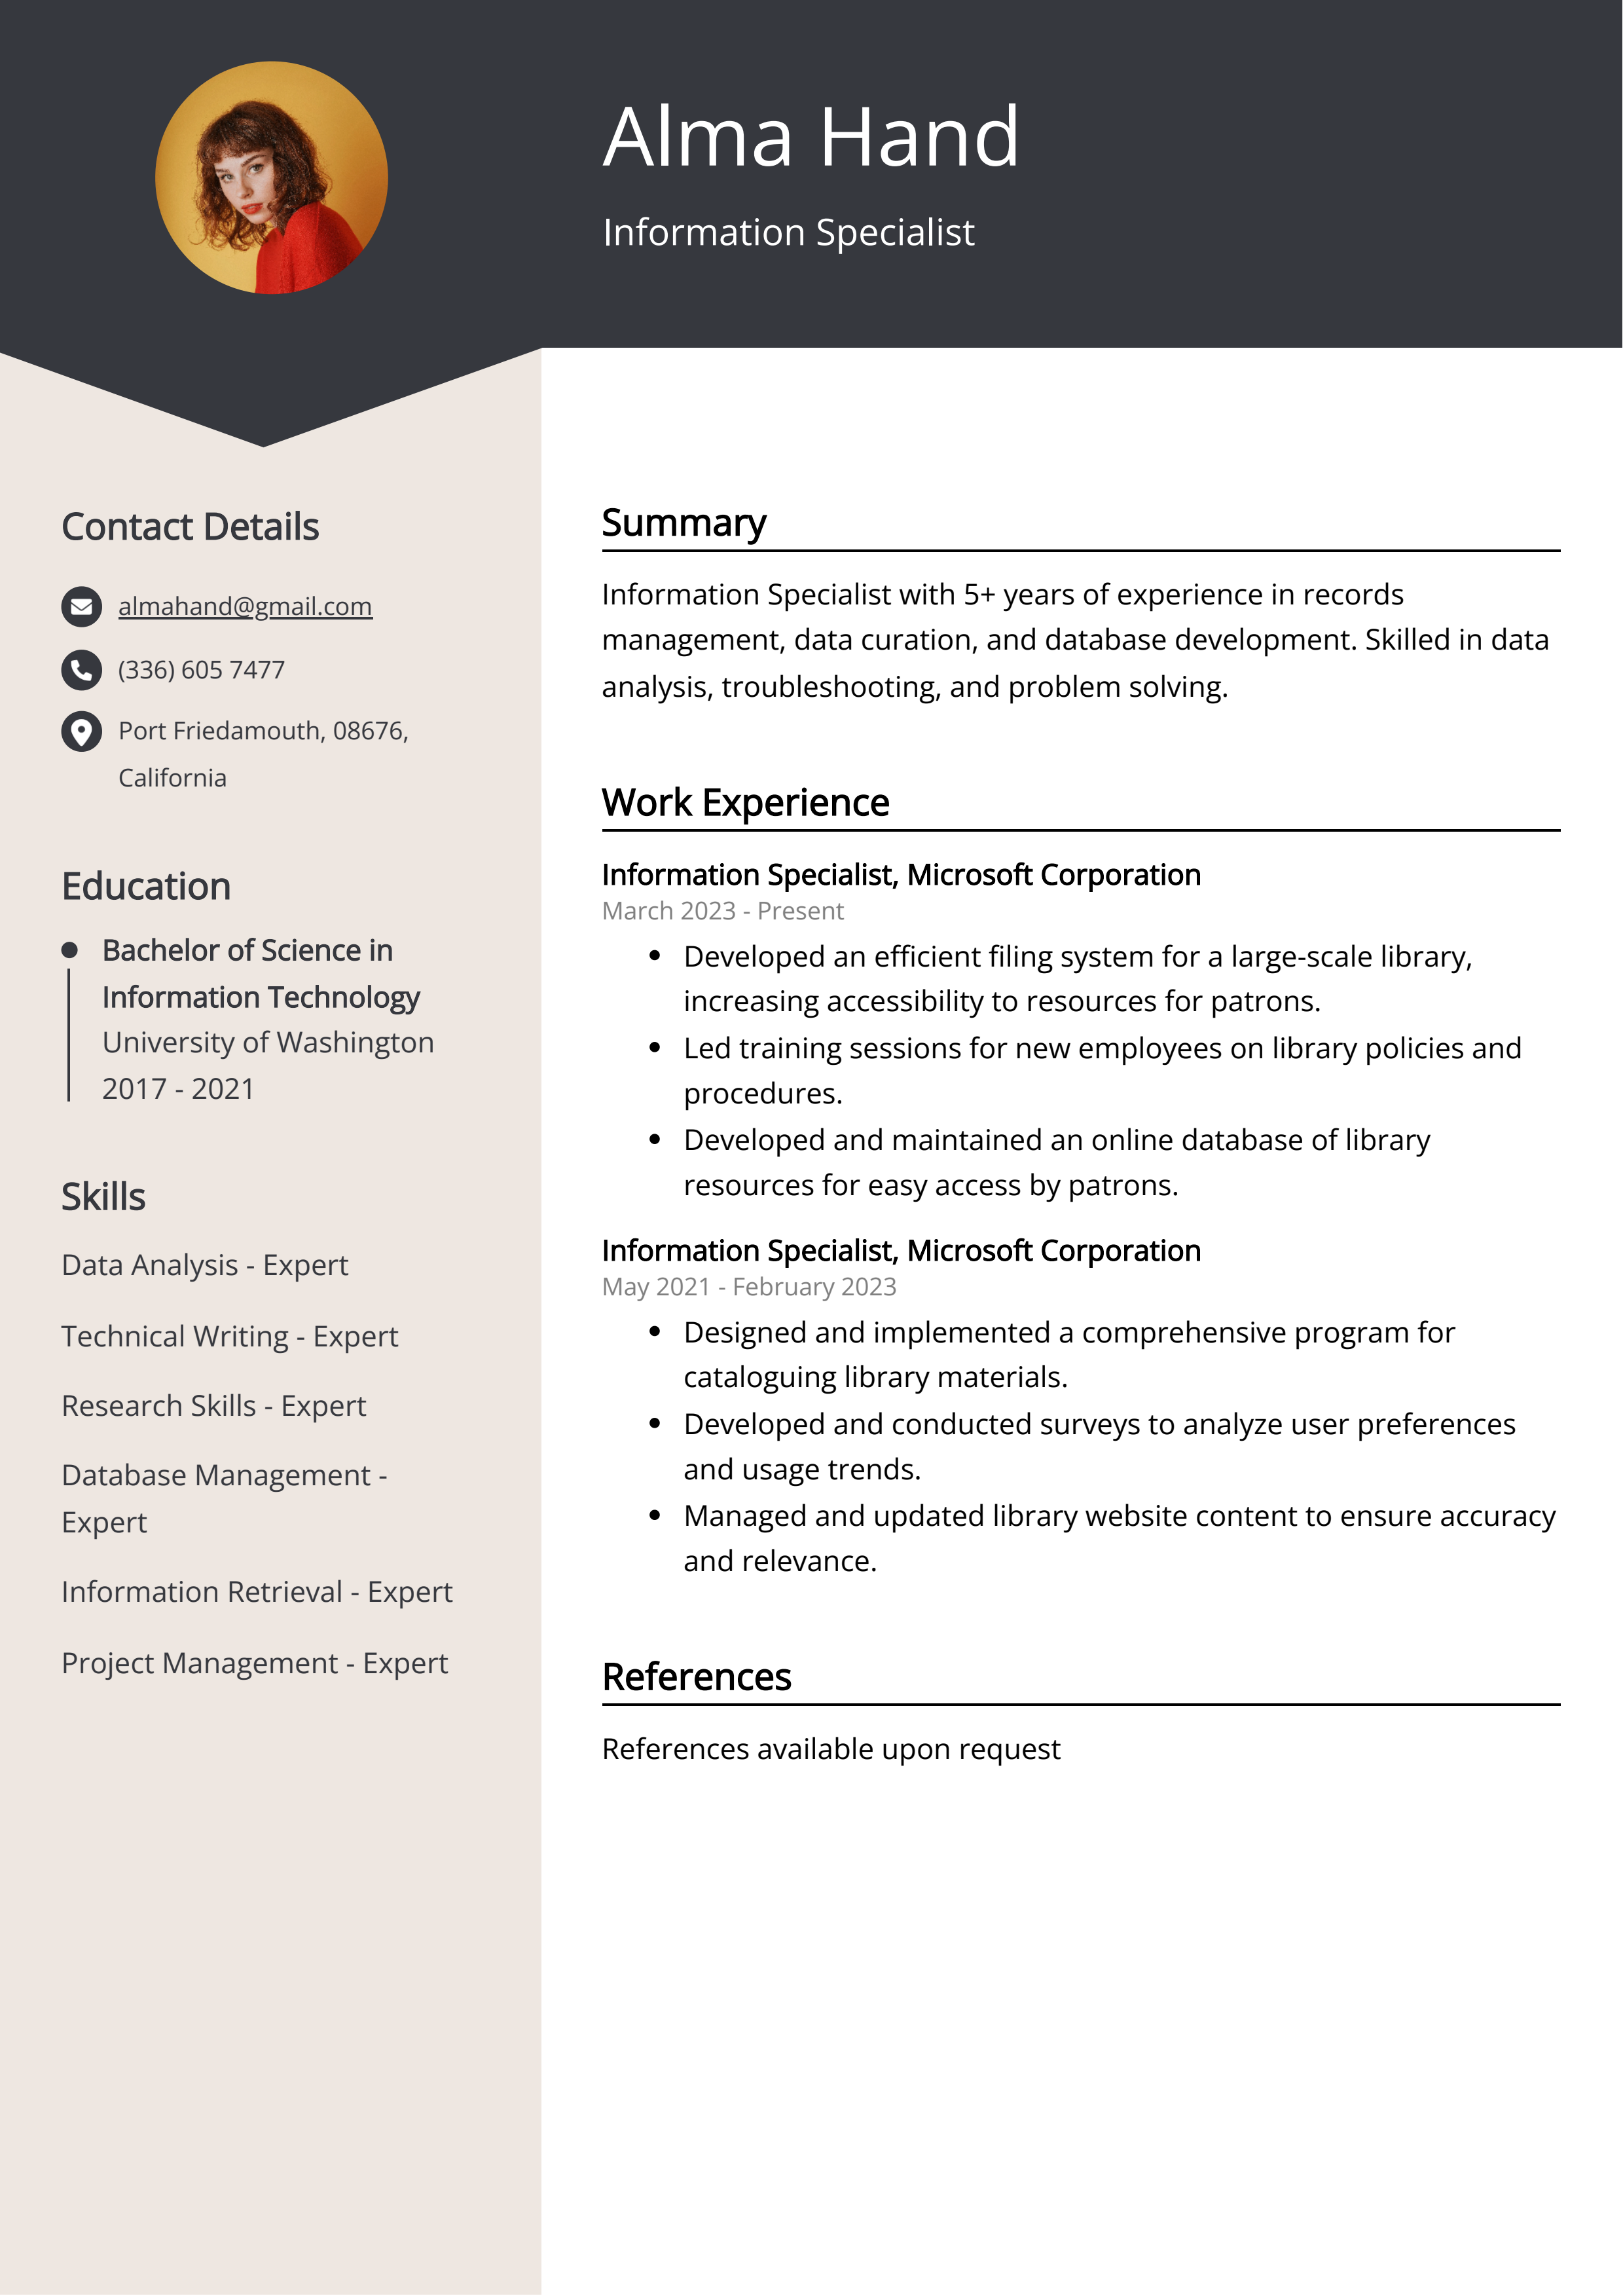 Information Specialist CV Example